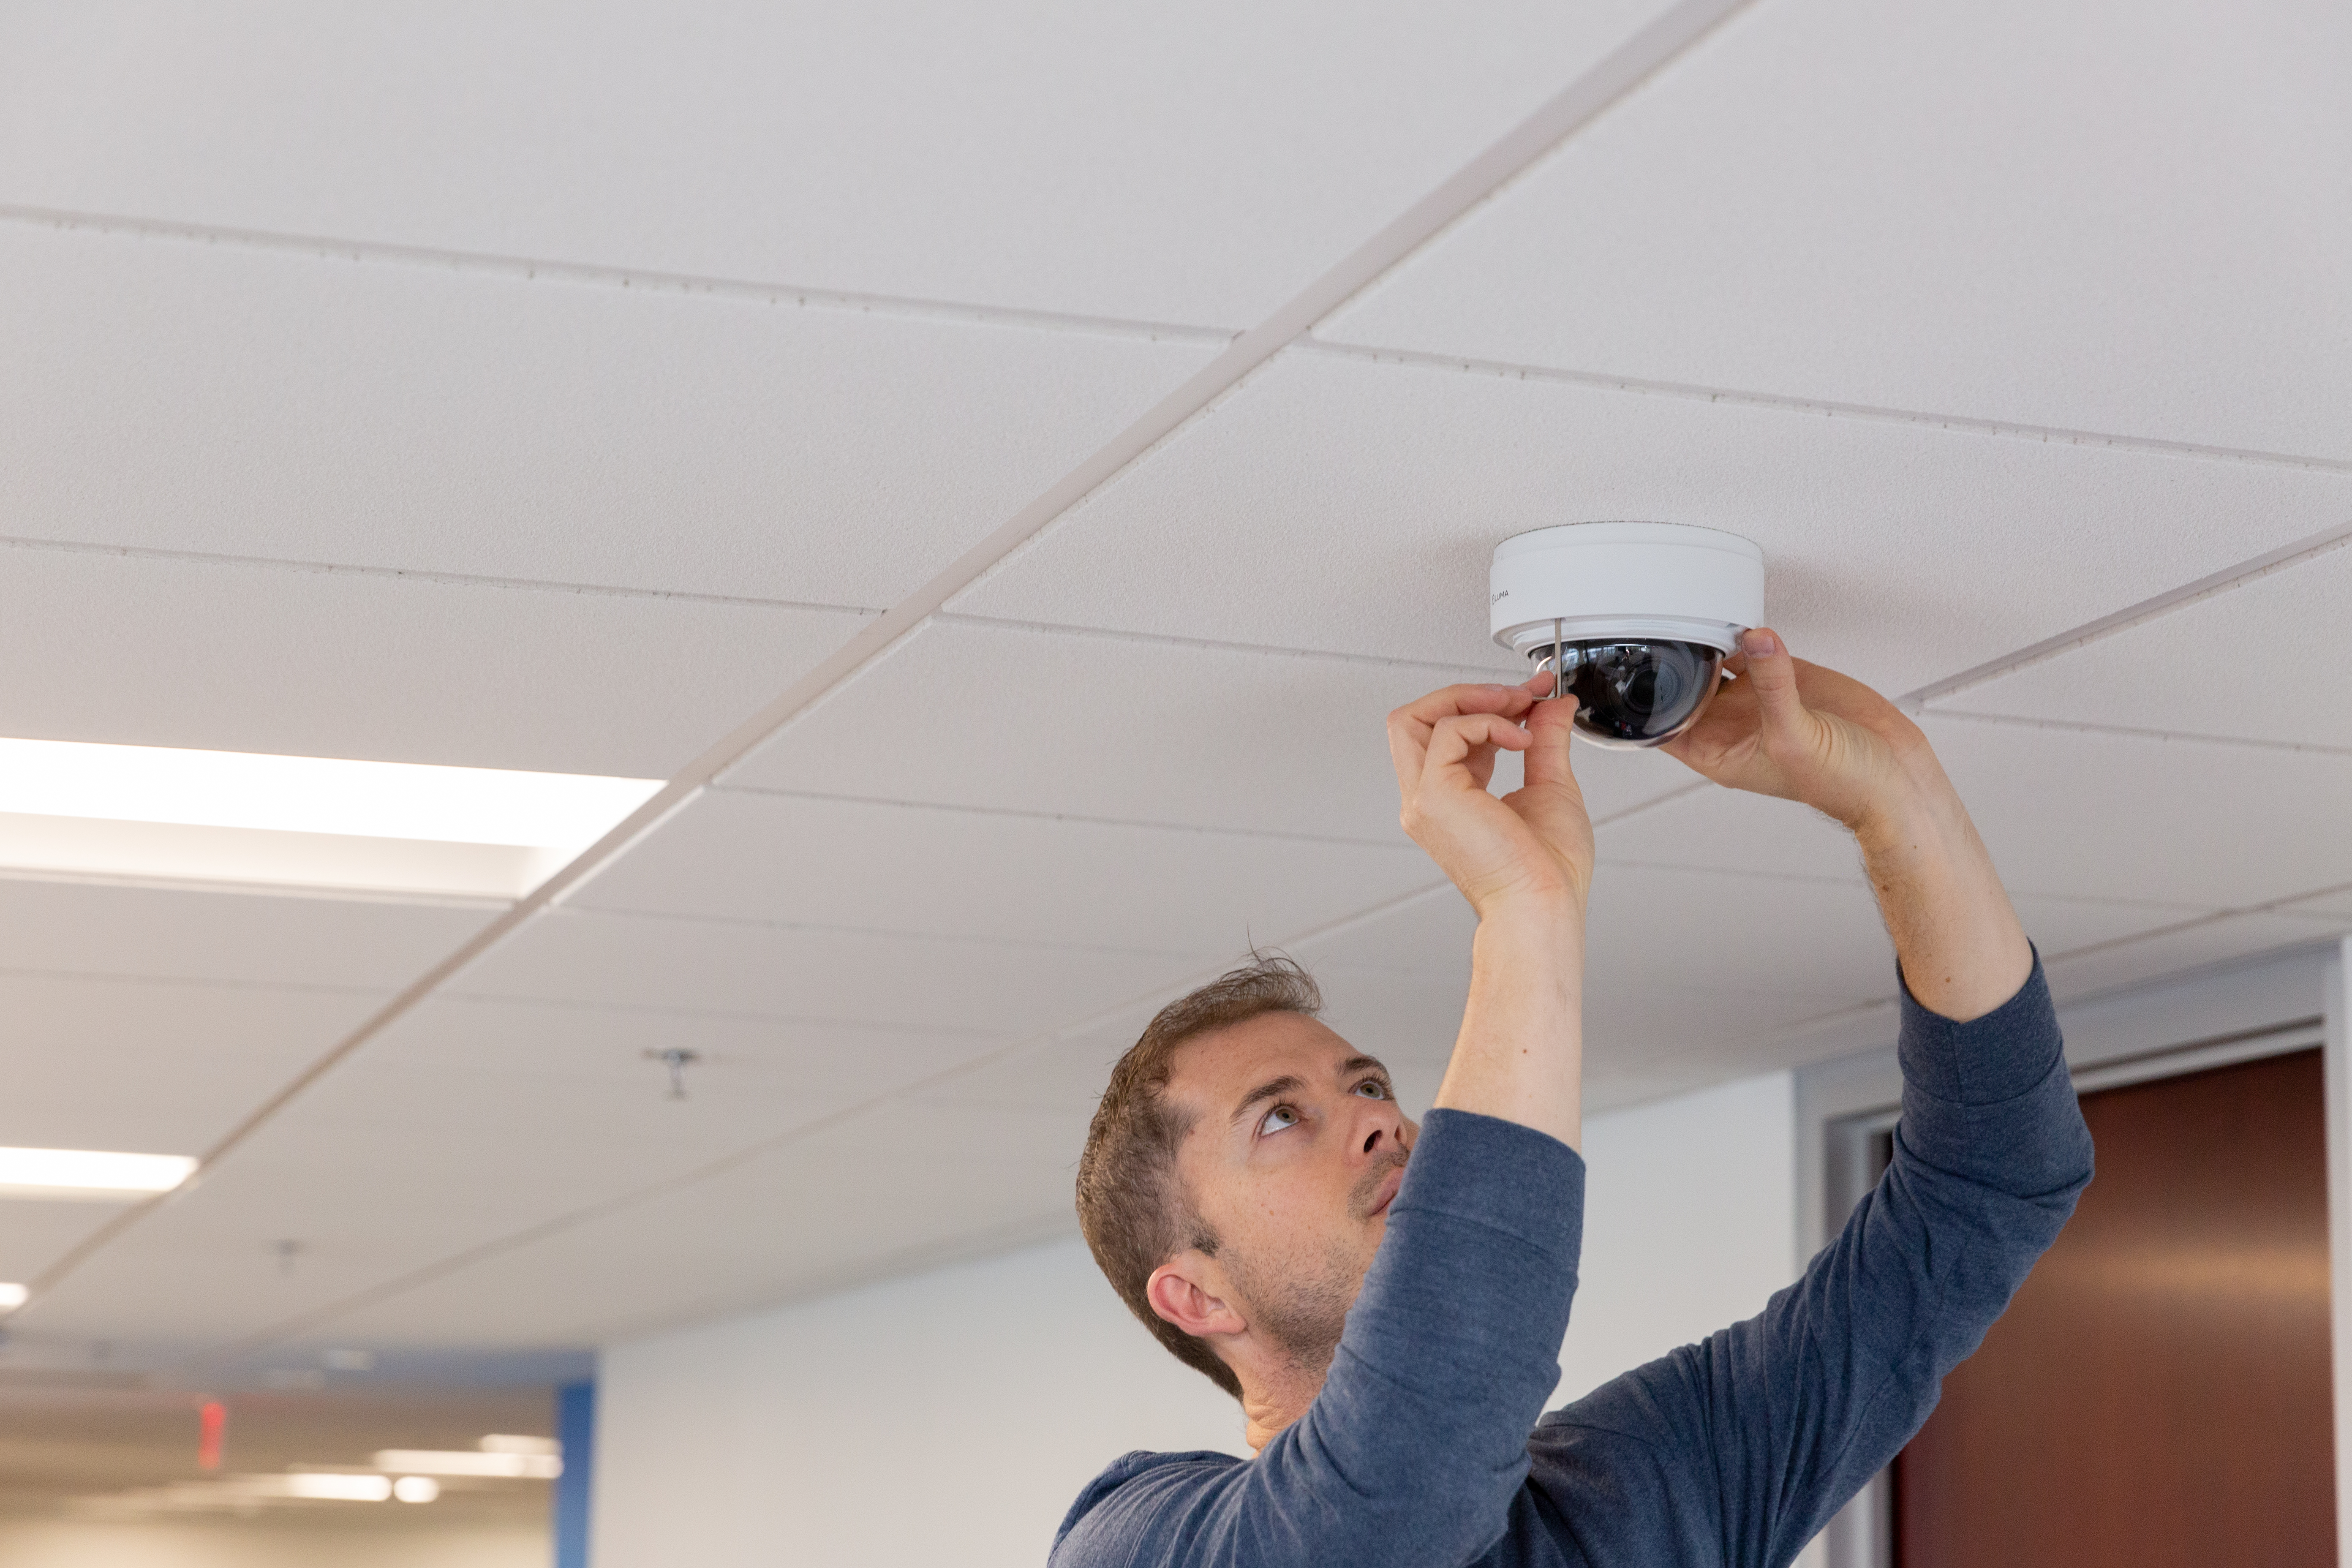 Techinician installing a Luma Surveillance camera in an office